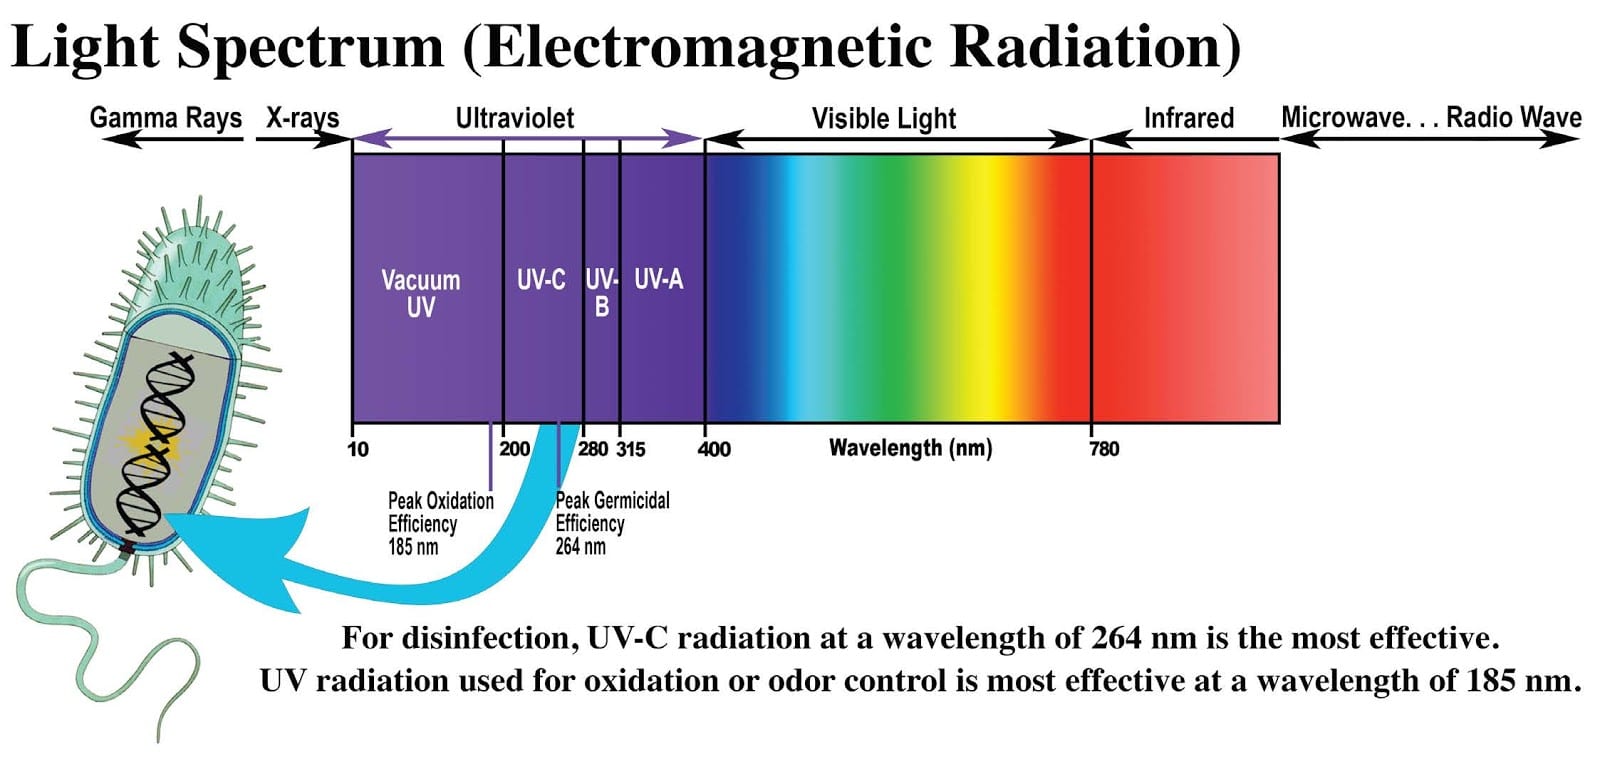 Can UV Light Kill the Coronavirus? - Heating Air